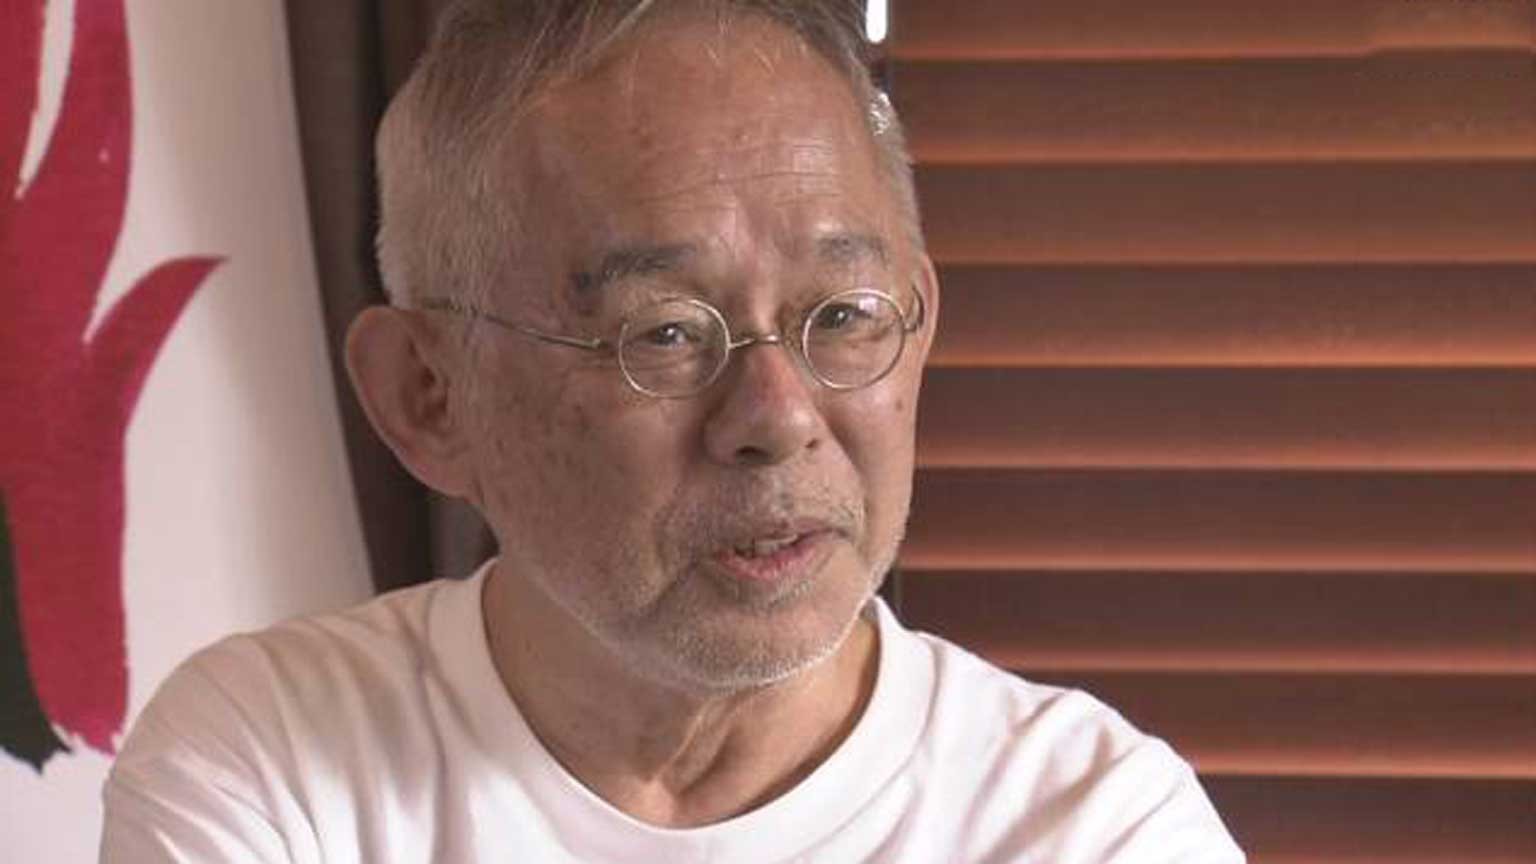 New Hayao Miyazaki film: Studio Ghibli producer explains unusual promotion